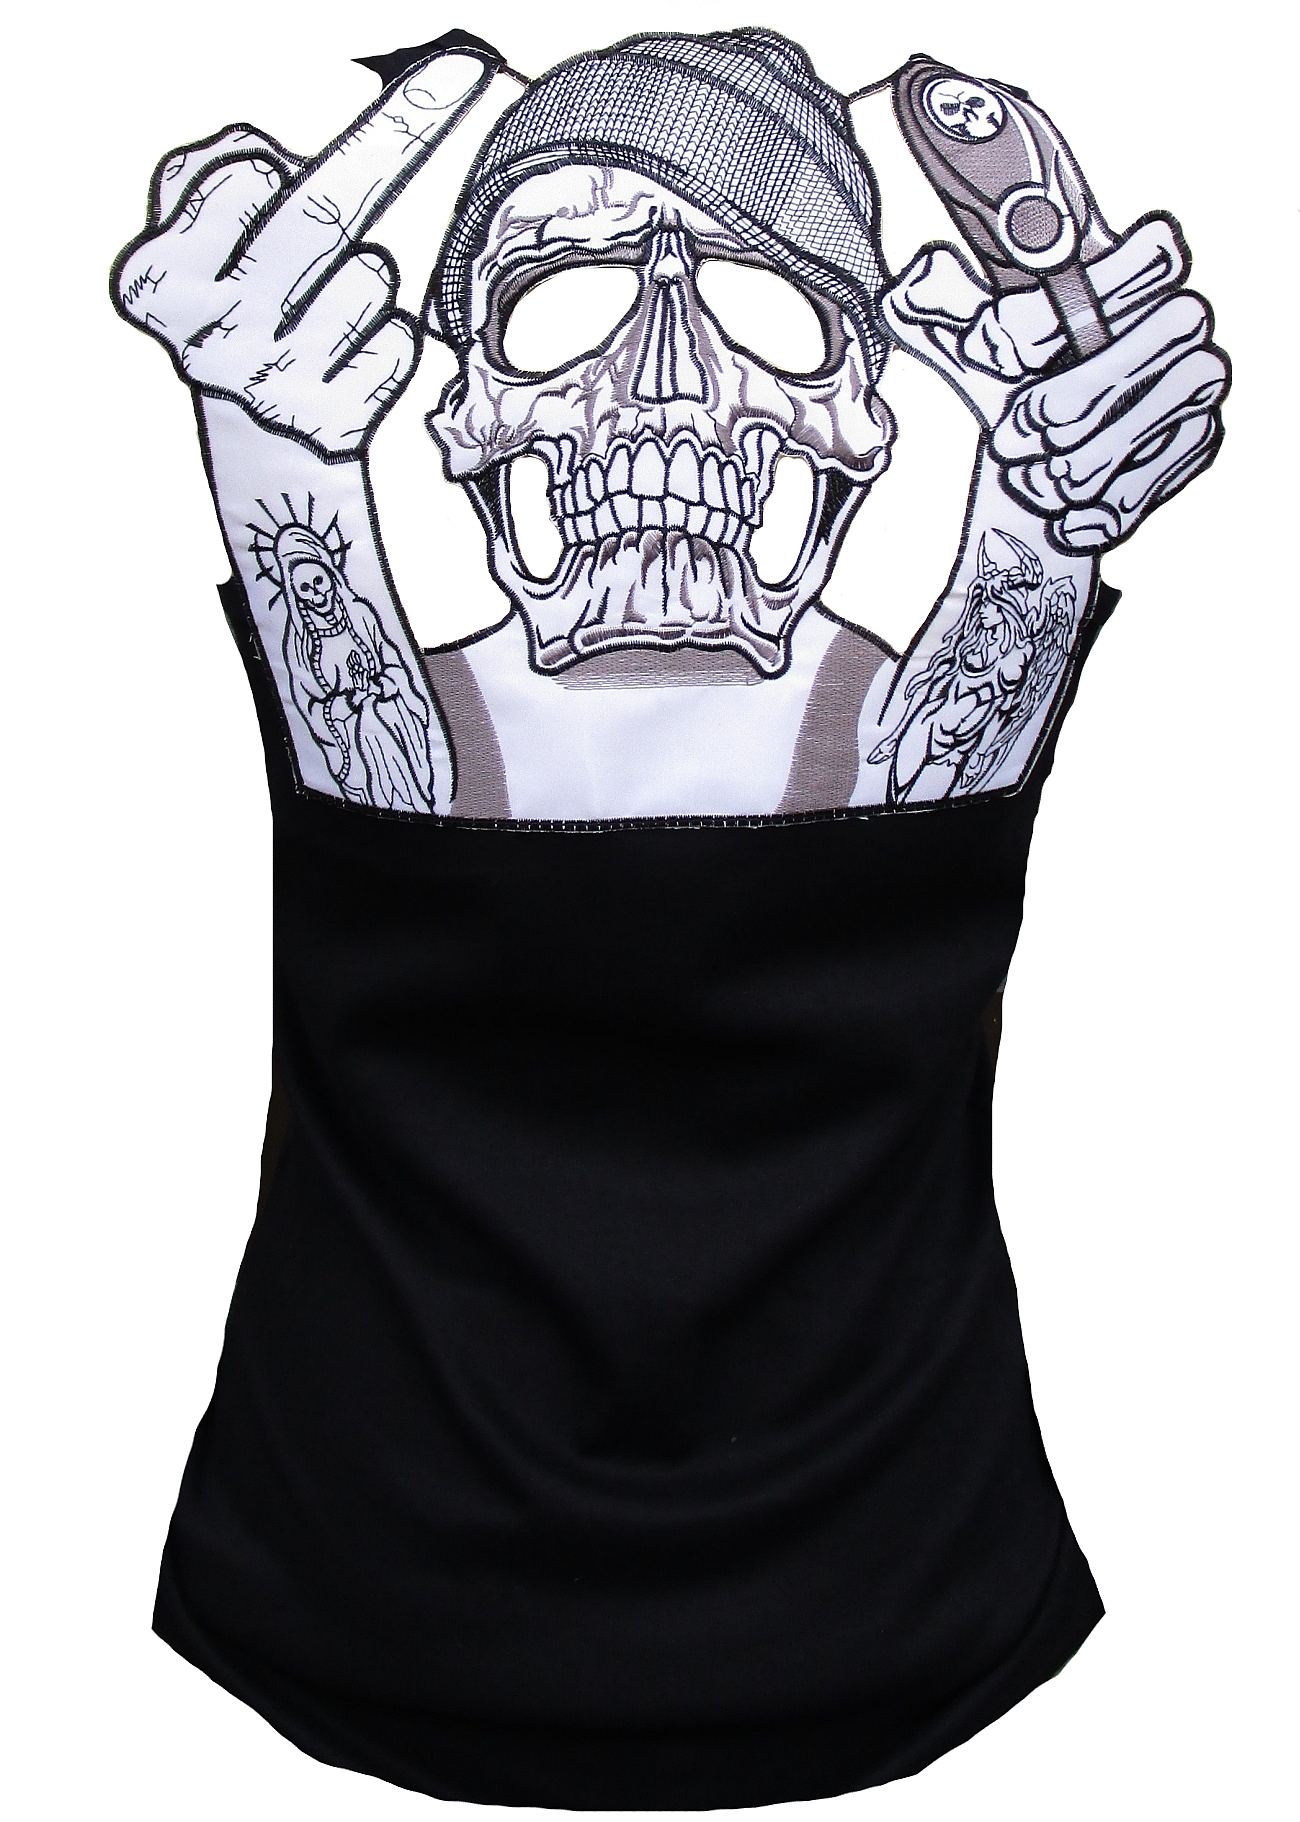 Rockabilly Punk Rock Baby Woman Black Tank Top Shirt Badass Bandit Tattoo Skull